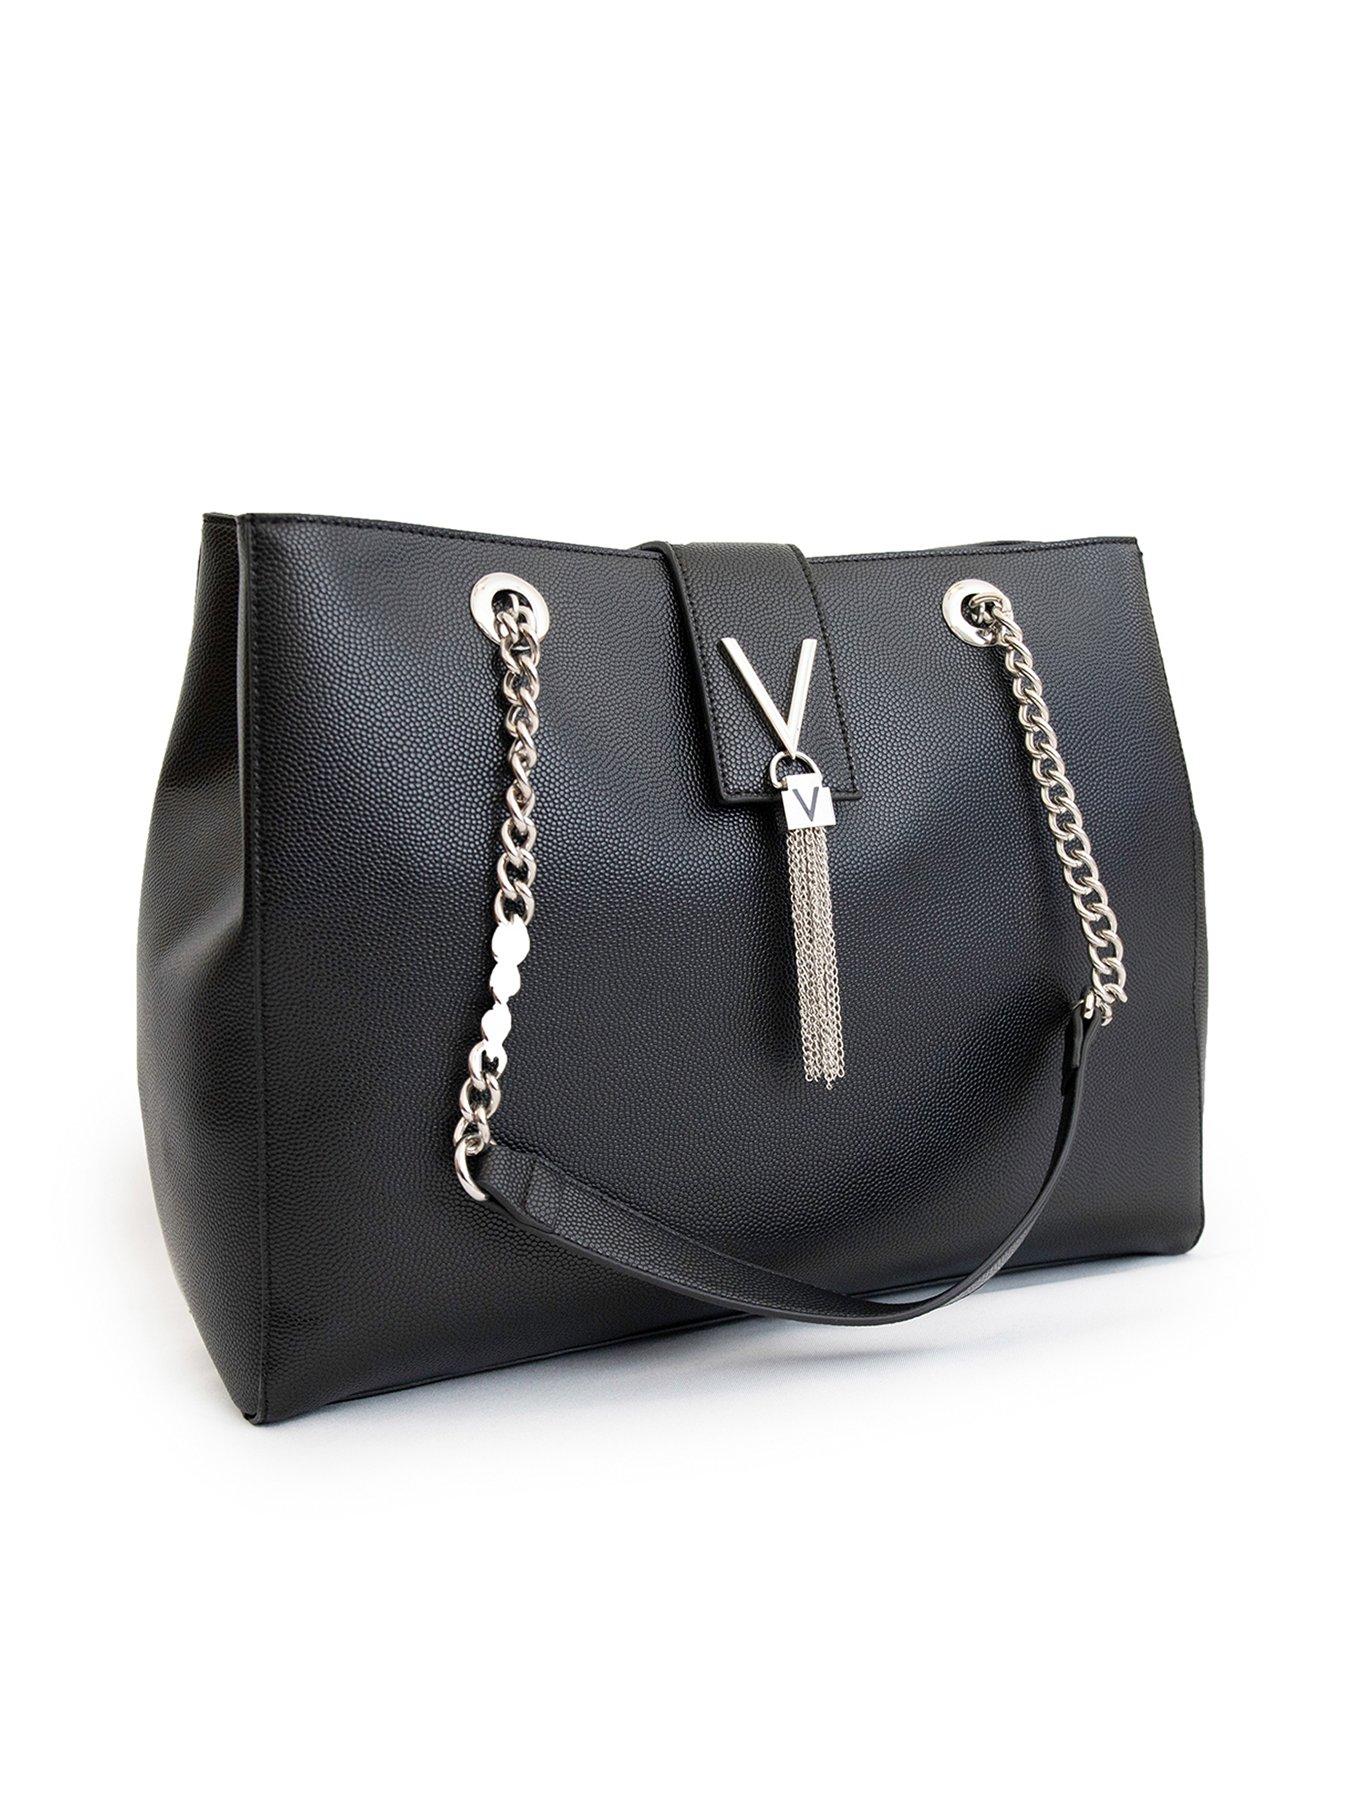 Valentino Womens Black Divina Large Tote Bag